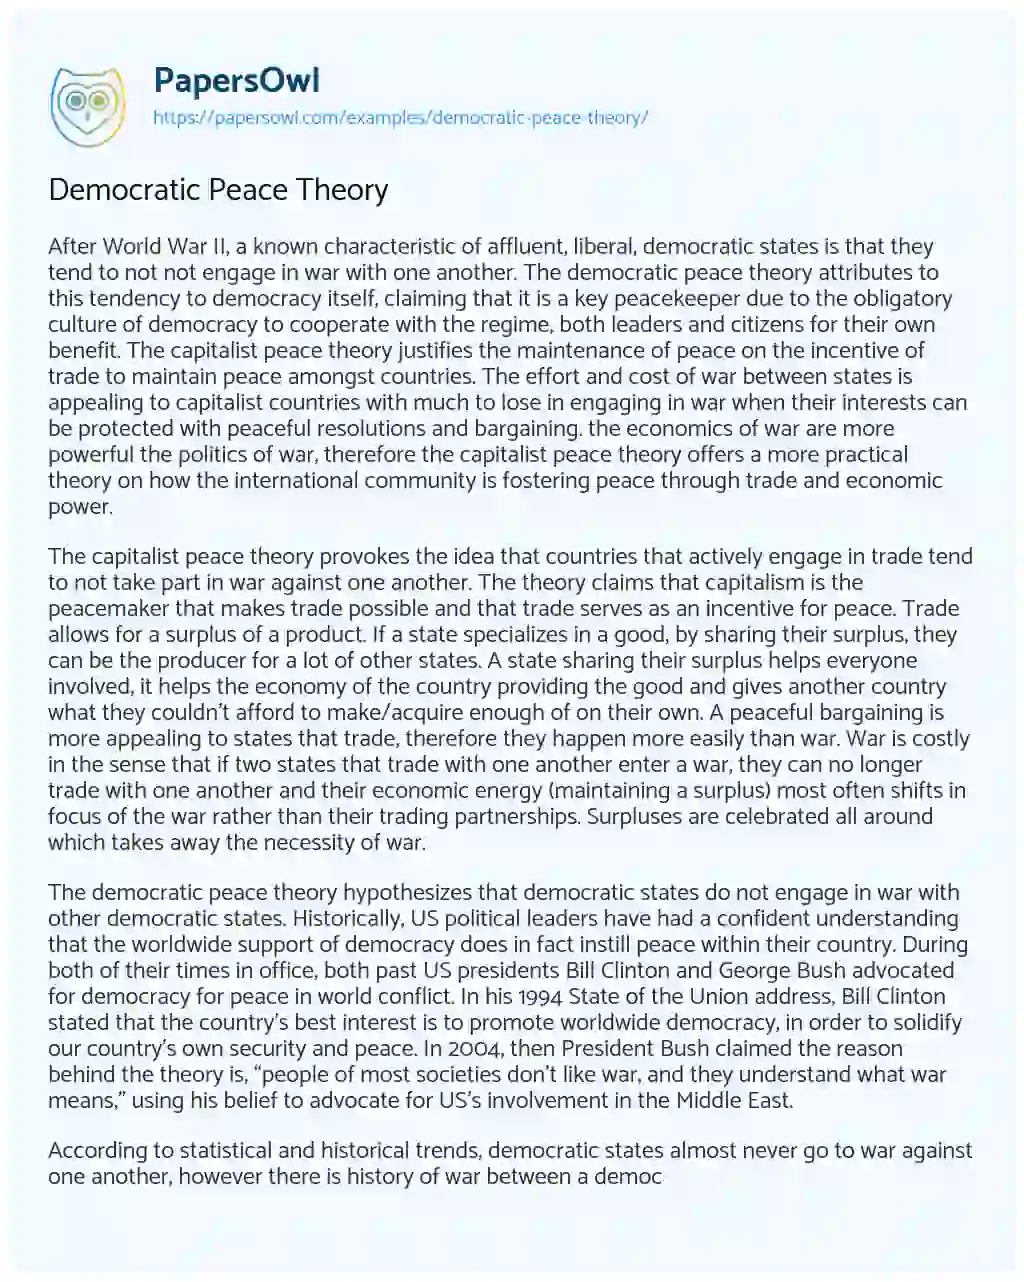 Essay on Democratic Peace Theory